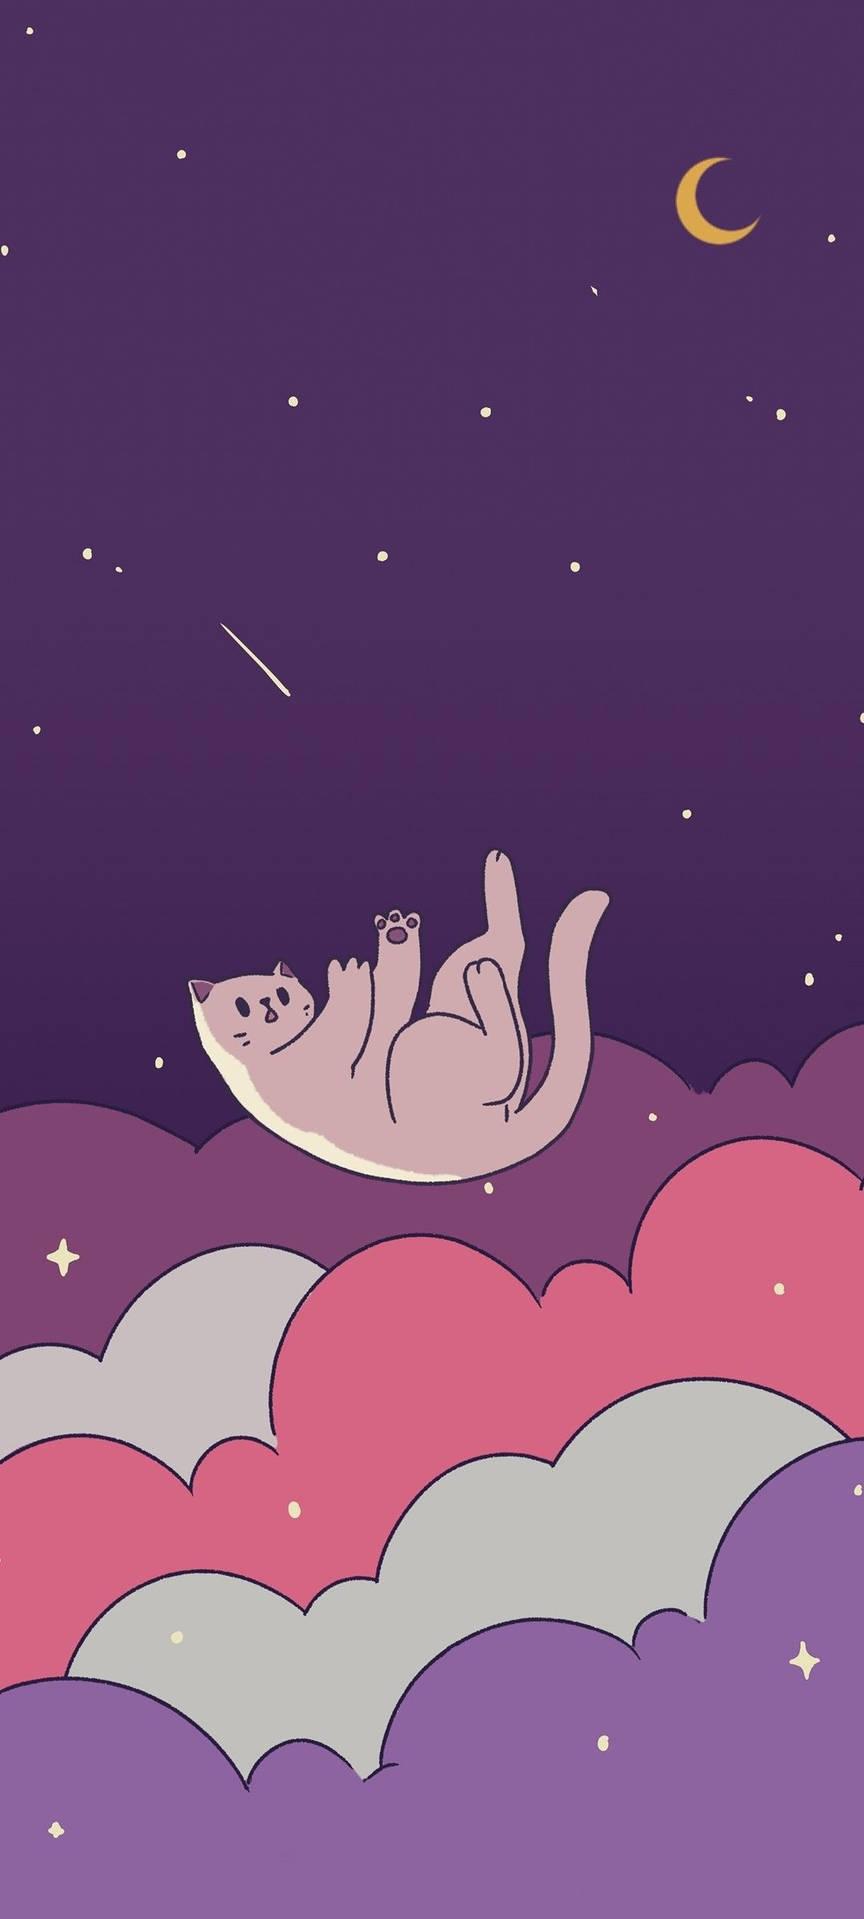 Aesthetic Falling Cat For iPhone Wallpaper